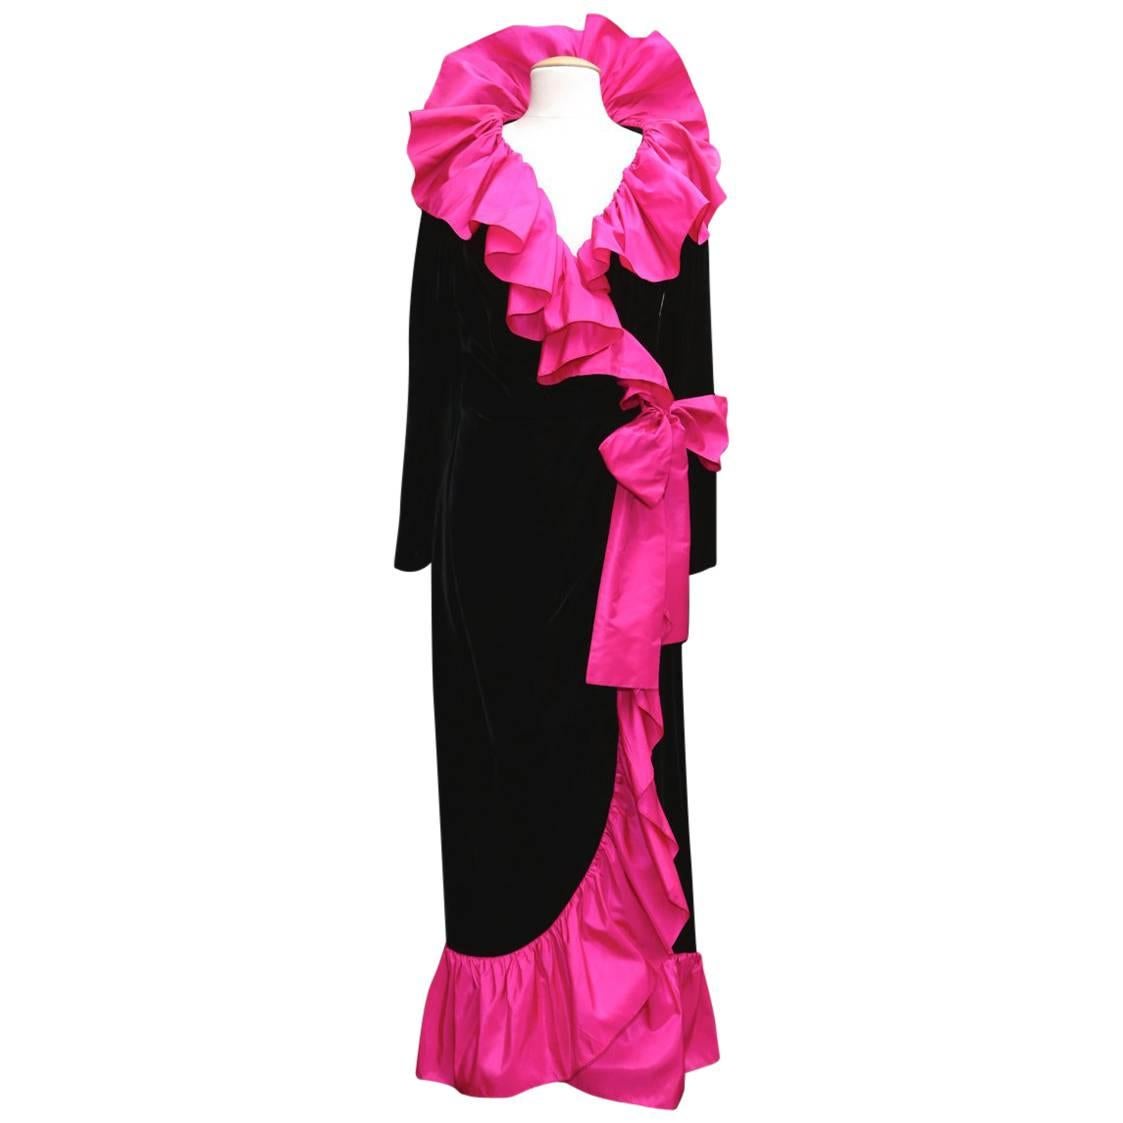 1980s Yves Saint Laurent Wrapping Dress in Black Velvet and Pink Ruffles